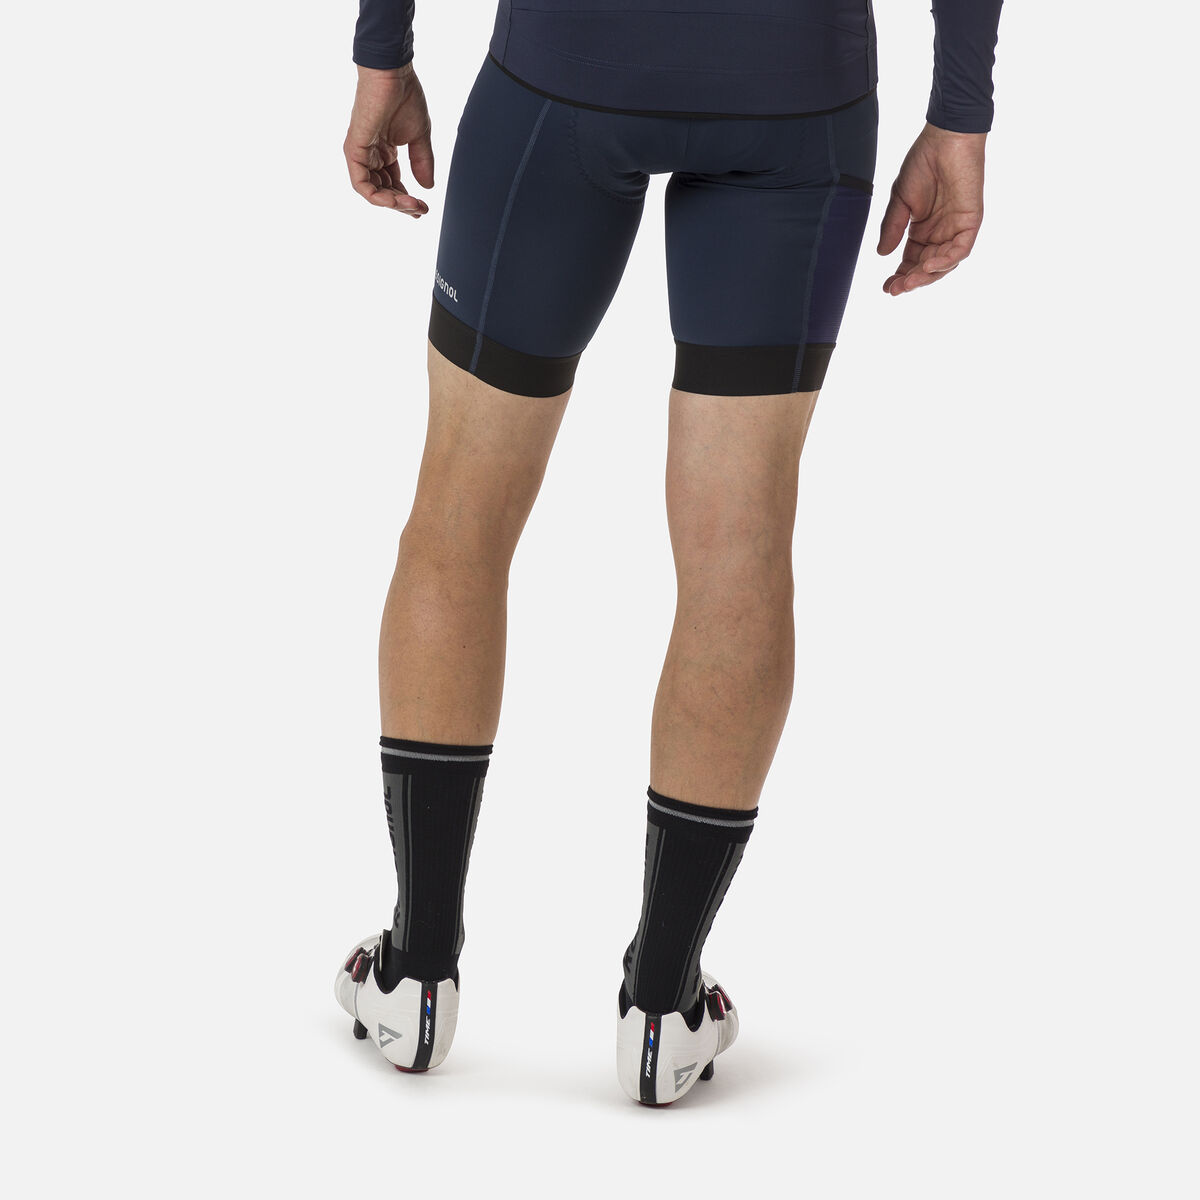 Men's Cycling Bib Shorts